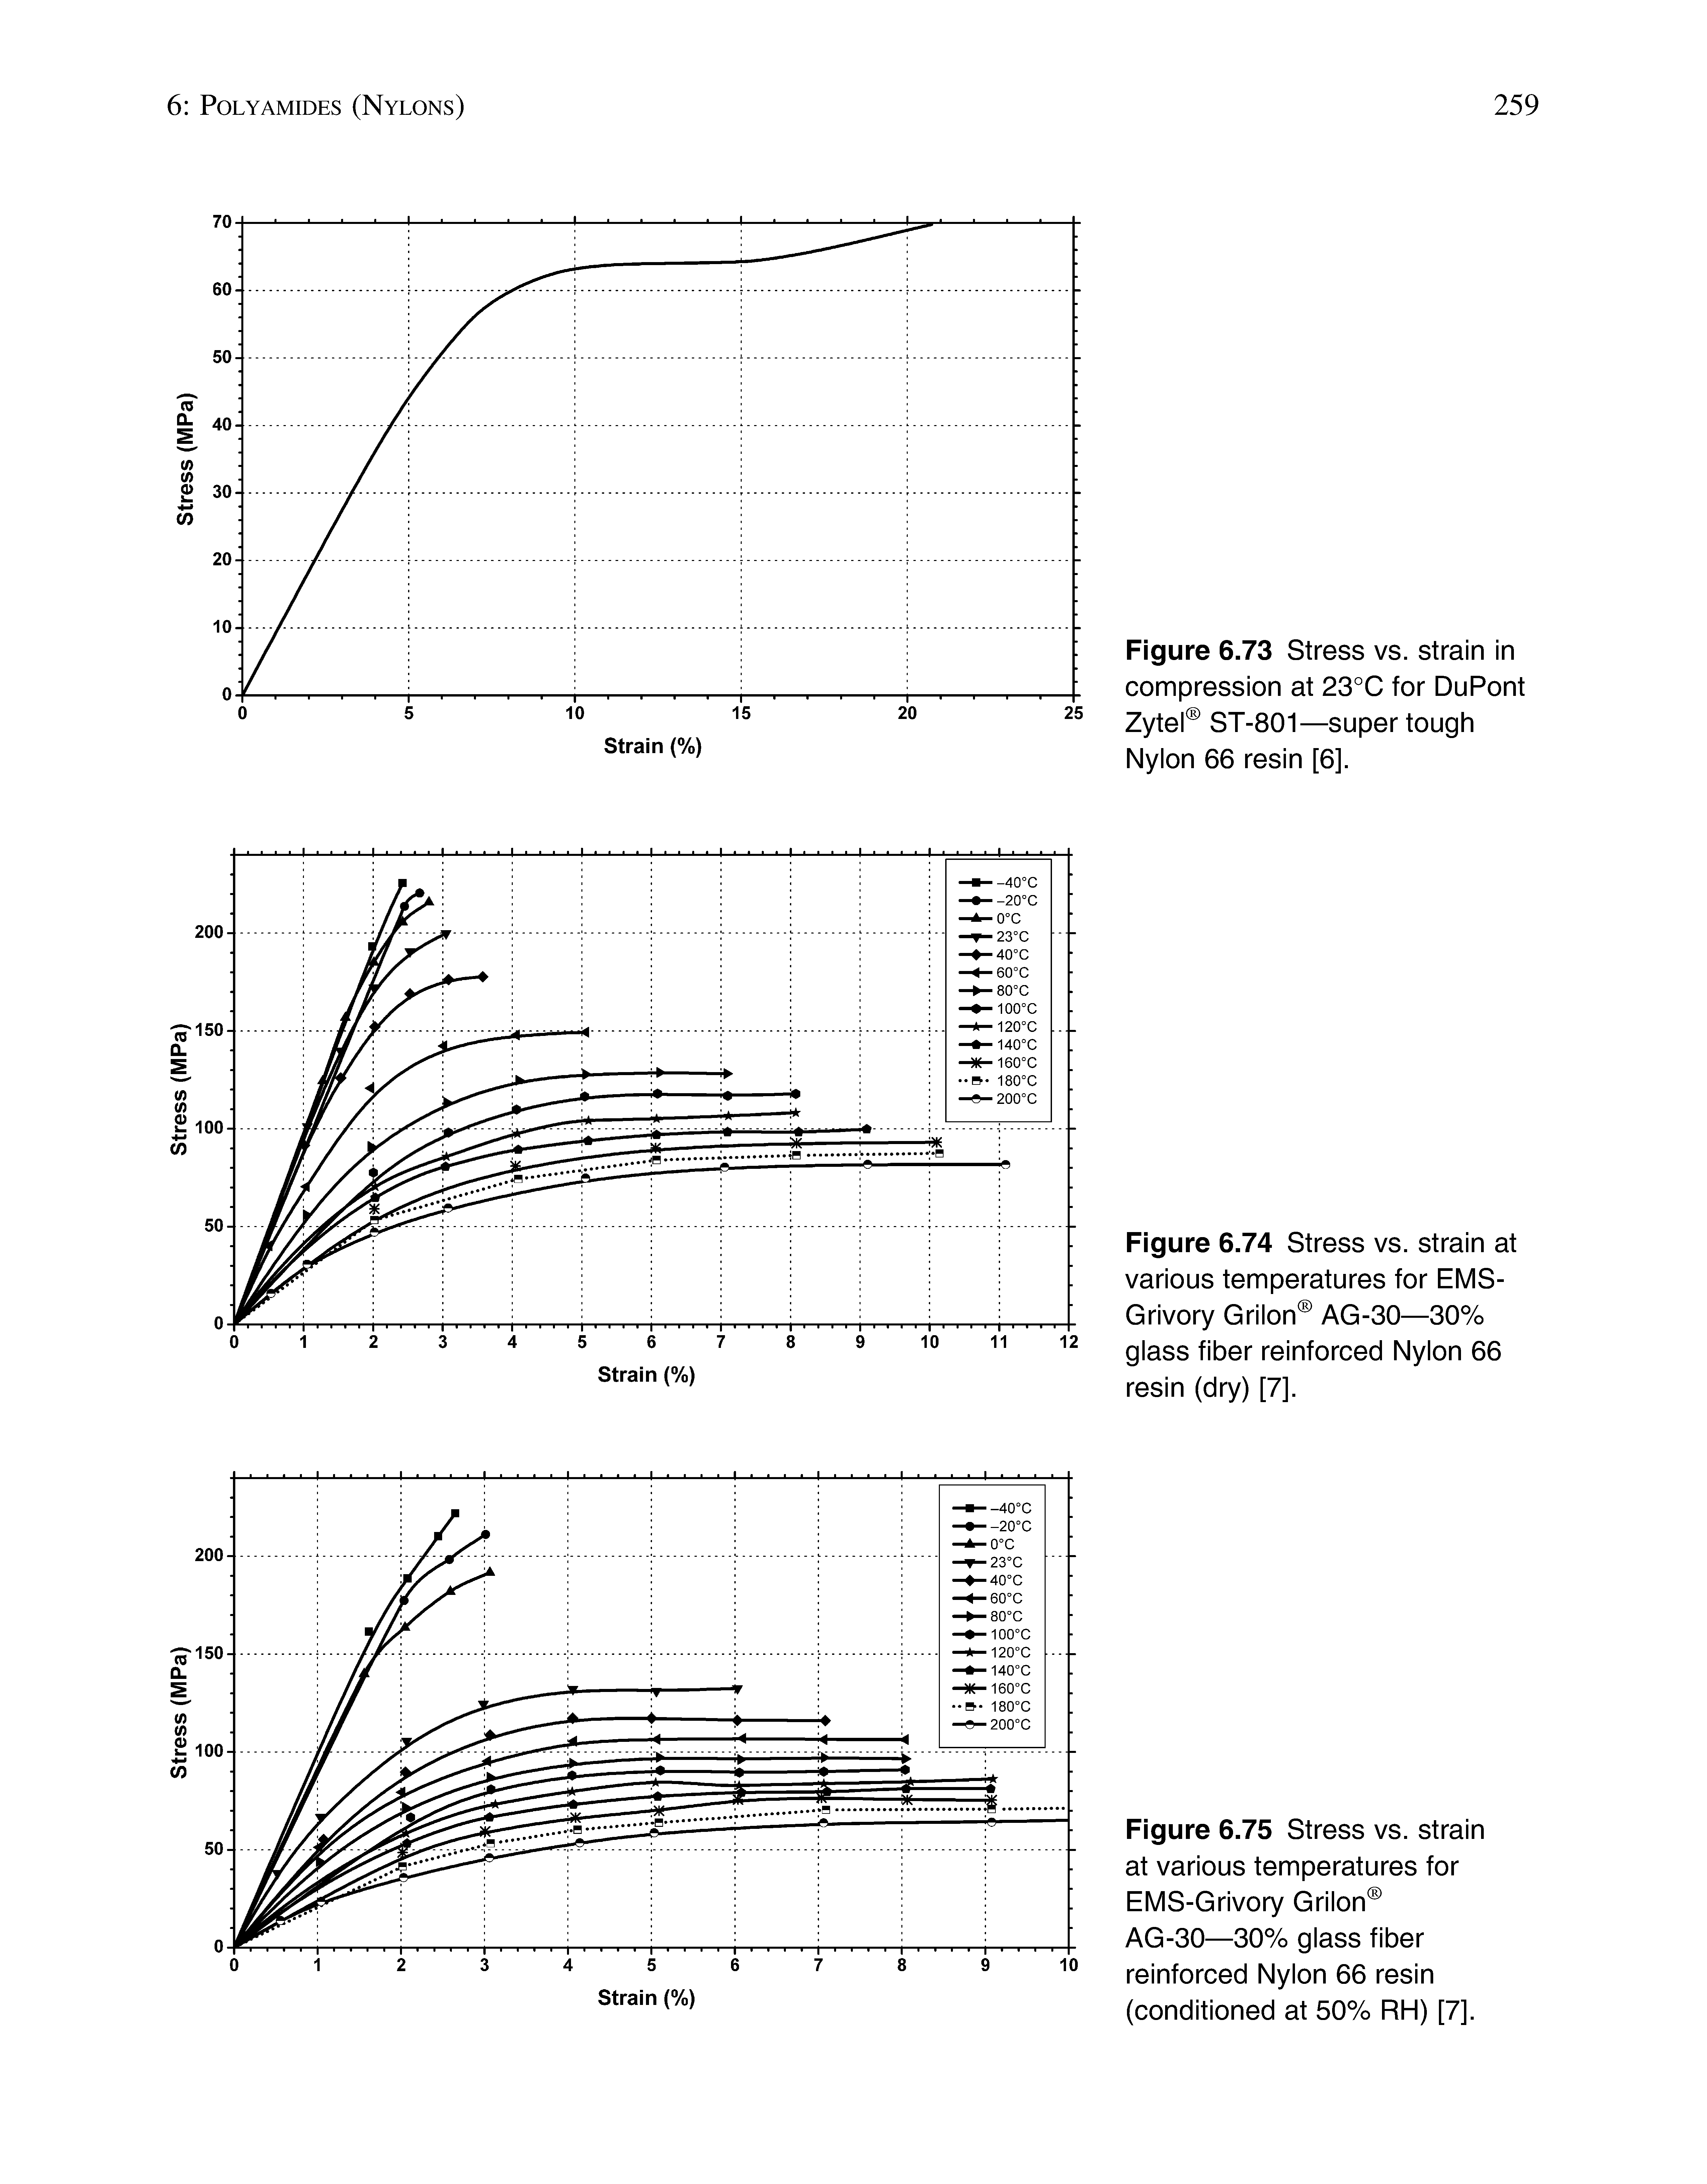 Figure 6.74 Stress vs. strain at various temperatures for EMS-Grivory Grilon AG-30—30% glass fiber reinforced Nylon 66 resin (dry) [7].